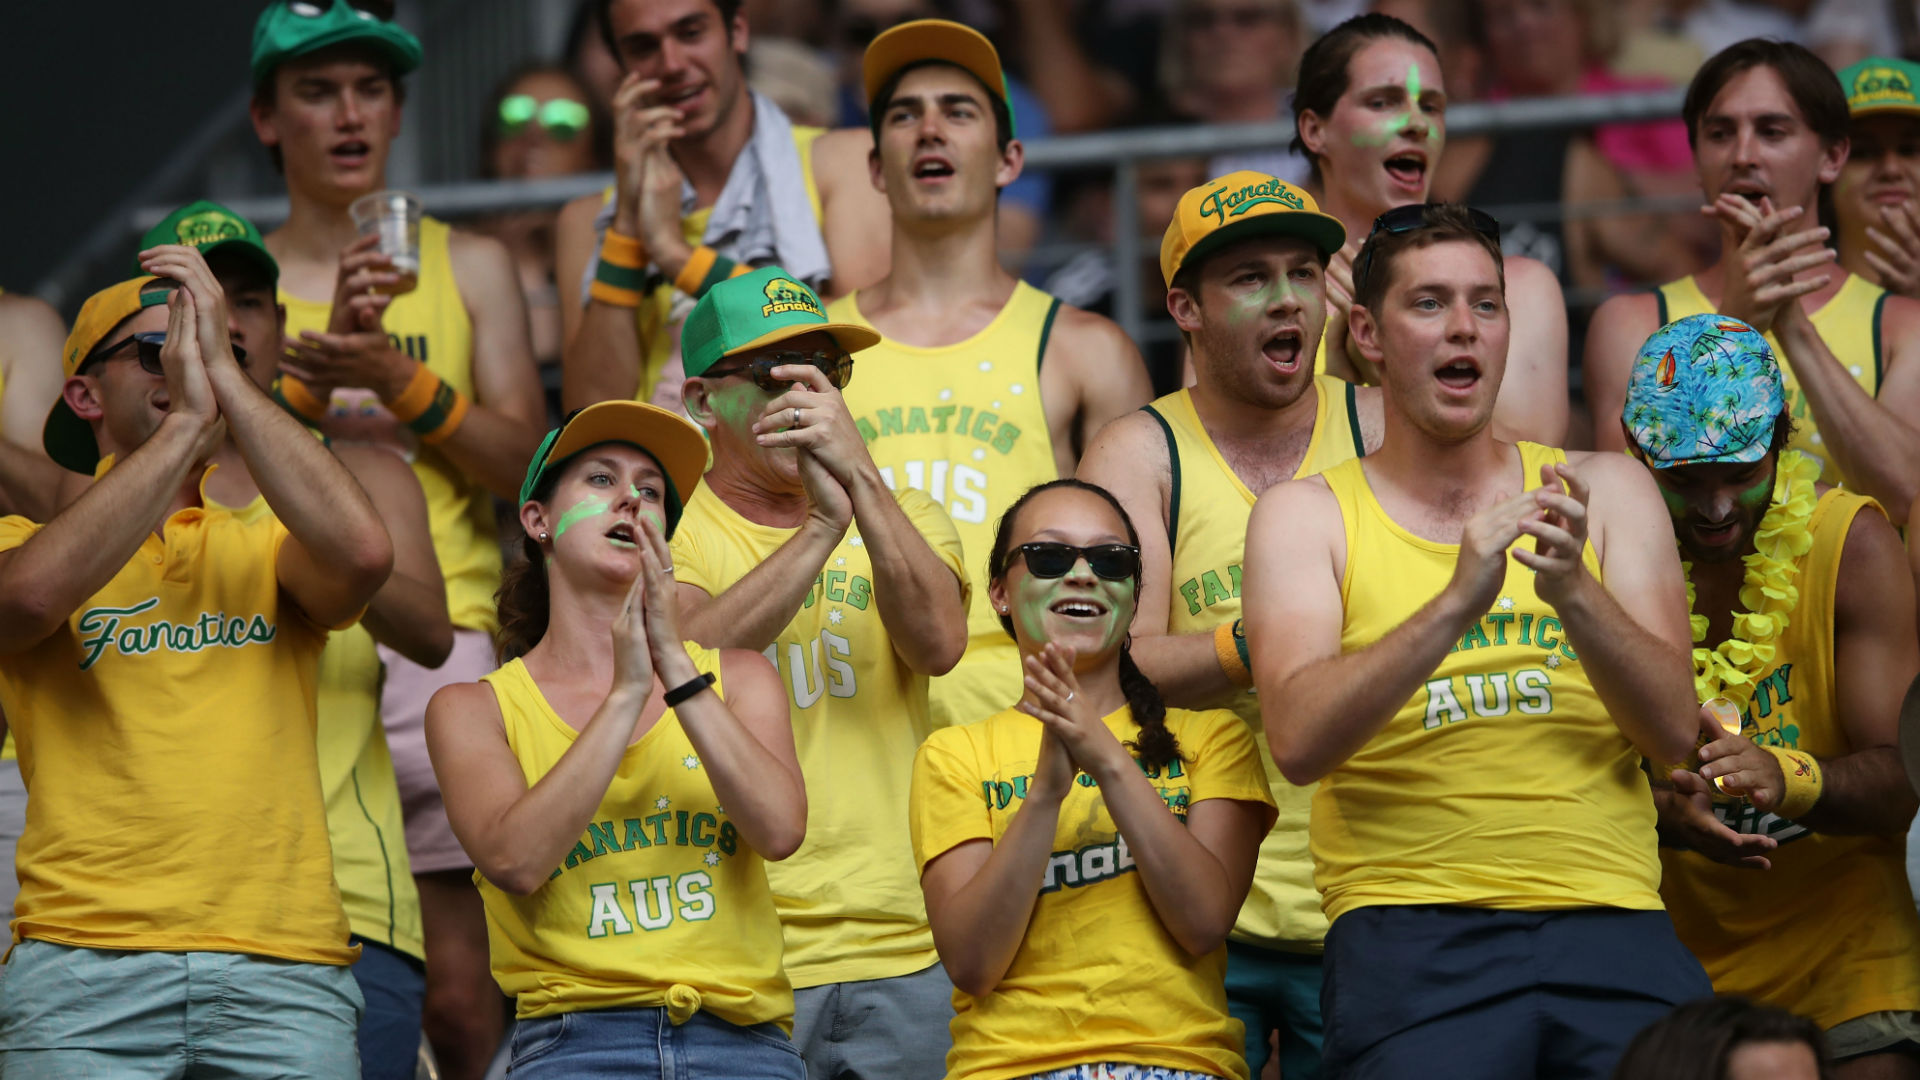 WATCH: Do the Fanatics actually know tennis? | Sporting News Australia